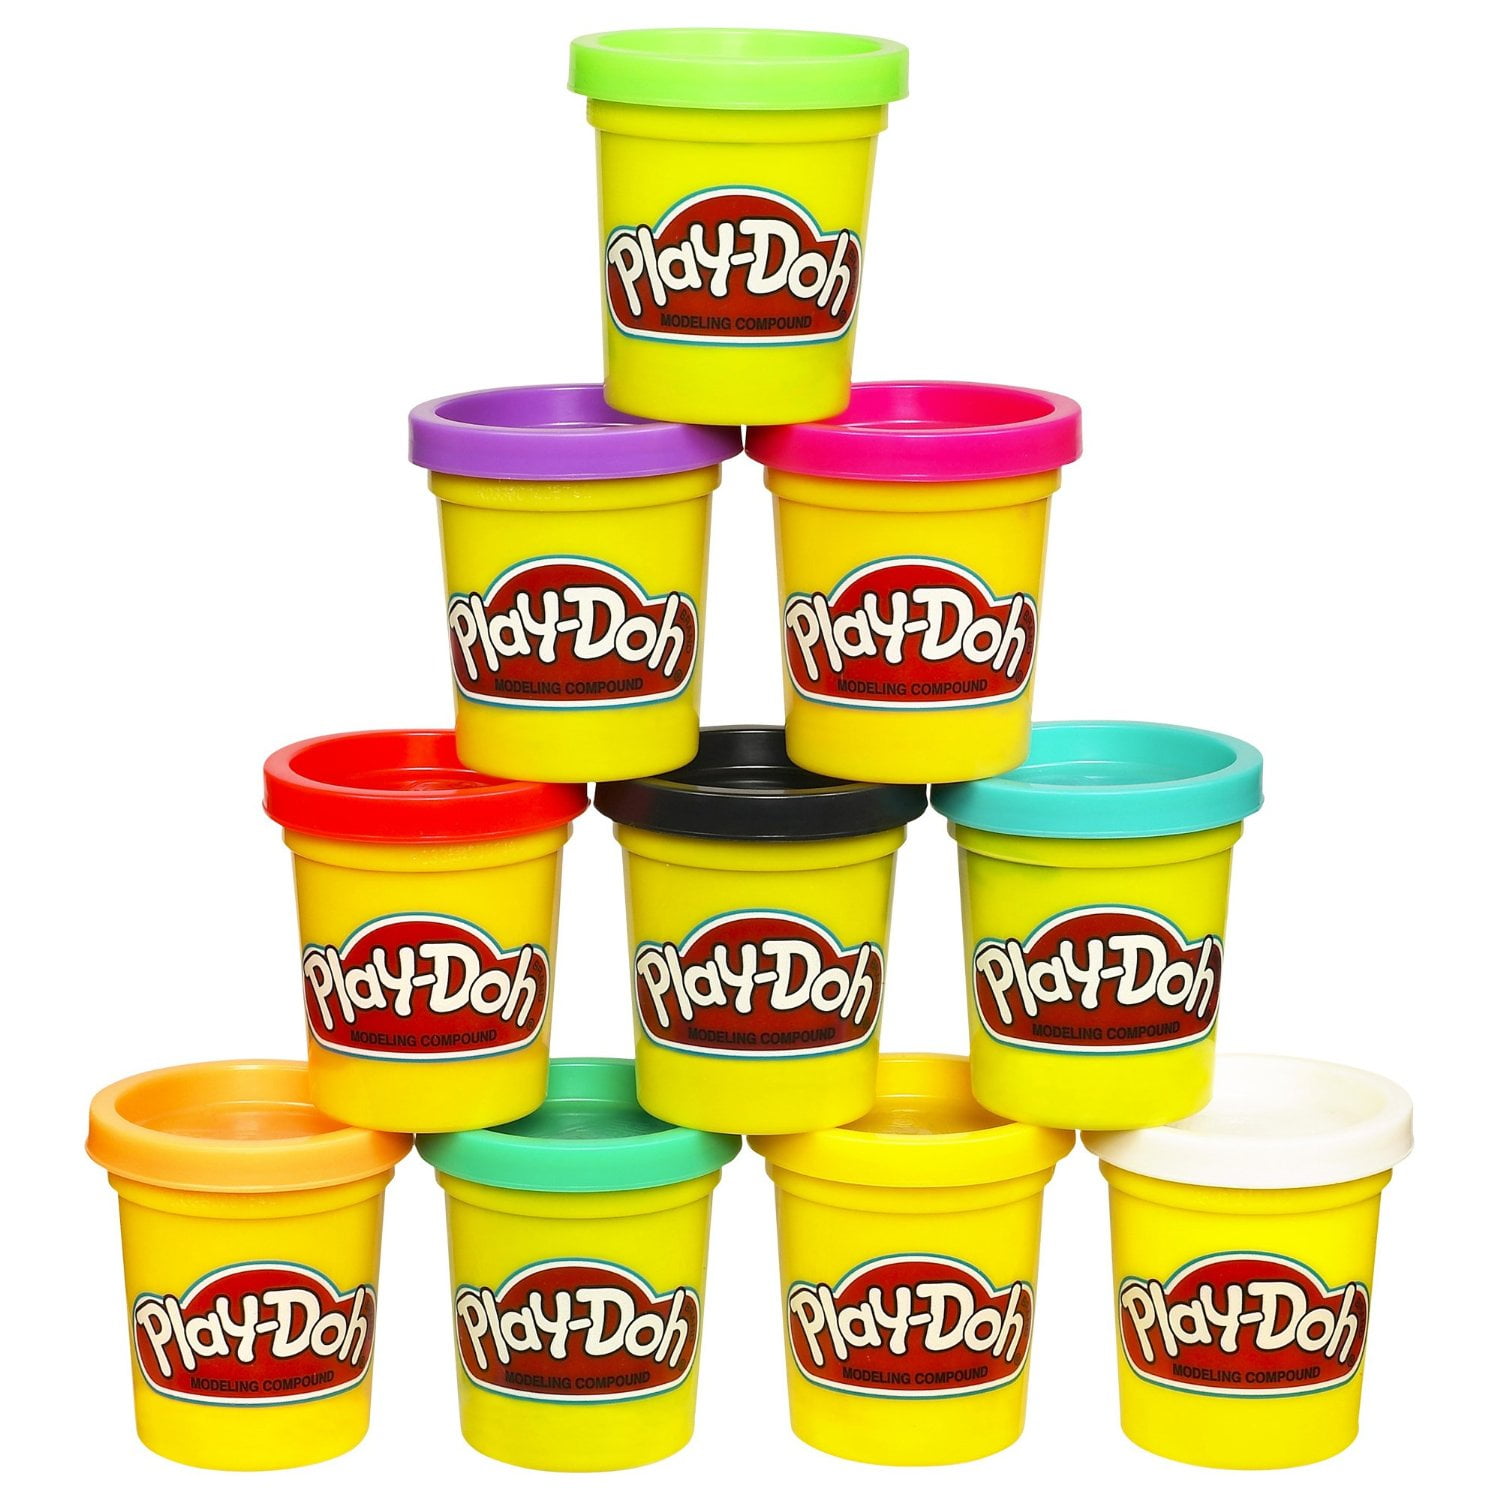 Play-Doh Dohvinci Basic 10 Pack of Colors Brand Art Supplies for Kids & Tweens 630509791071